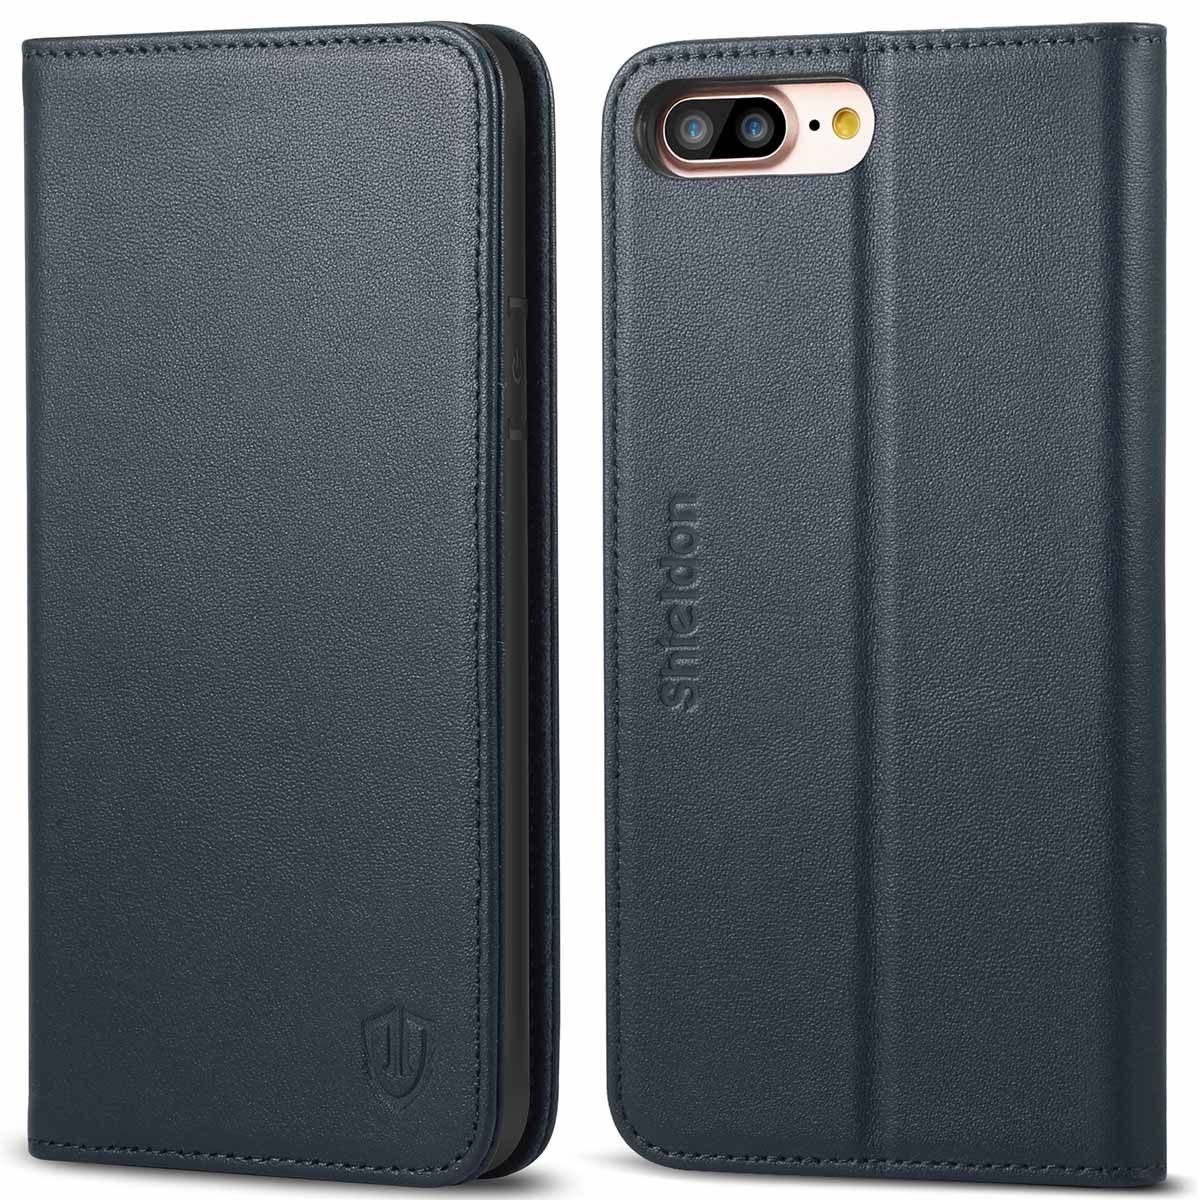 Stof dikte Passief SHIELDON iPhone 8 Plus Wallet Case - Blue color Genuine Leather Cover,  Magnet Closure, Kickstand Function, Flip Cover, Folio Style